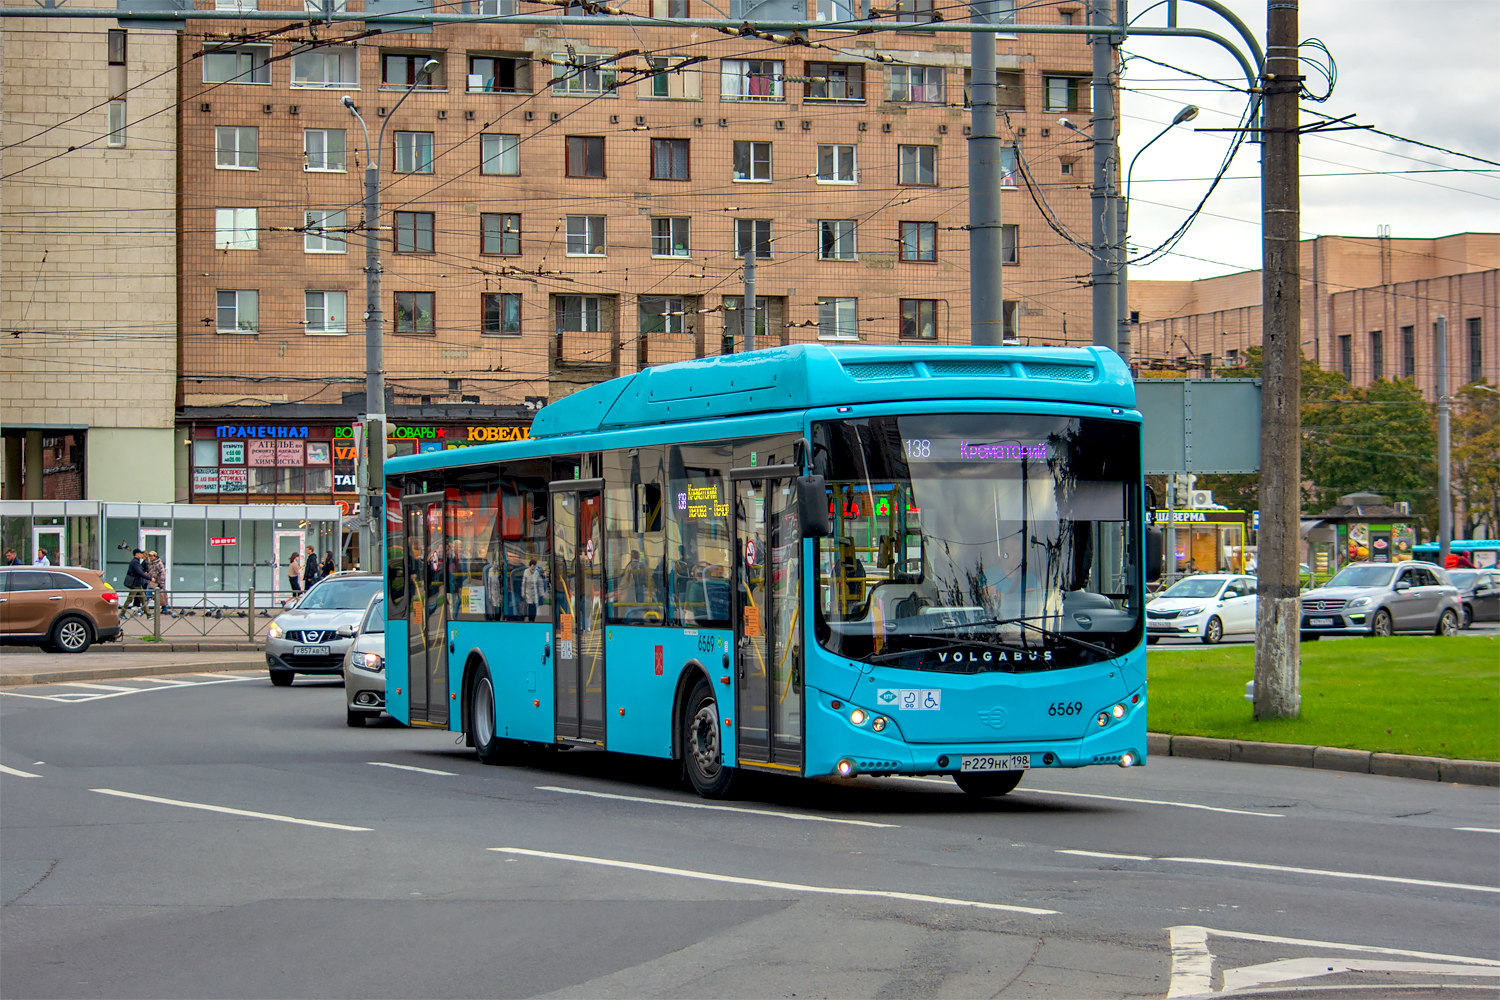 Saint Petersburg, Volgabus-5270.G4 (CNG) №: 6569